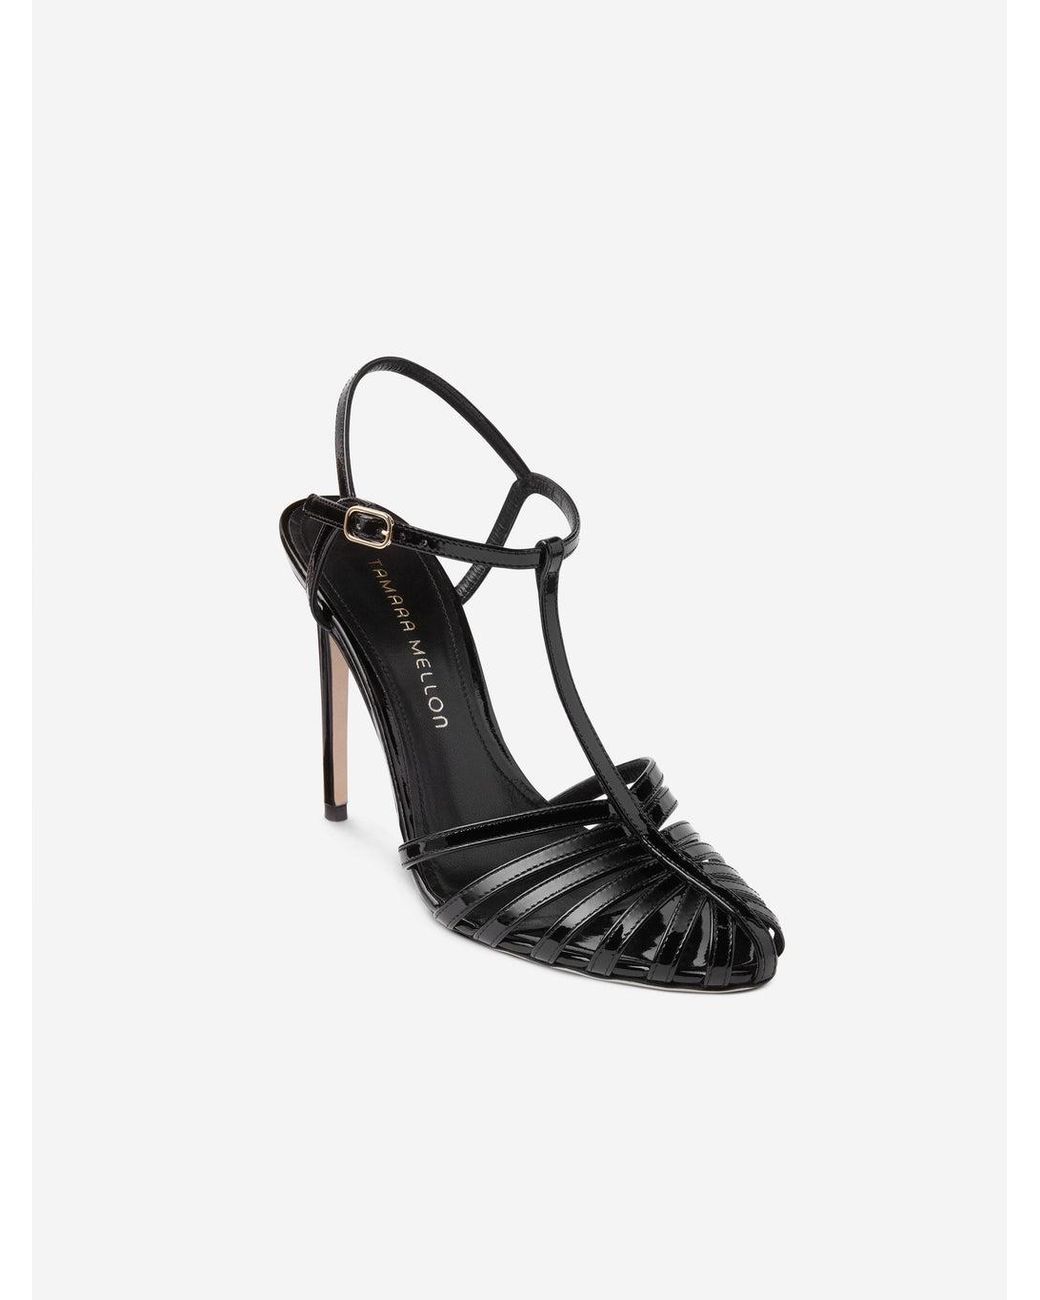 Tamara Mellon Studio 54 High-heel Sandals in Black | Lyst